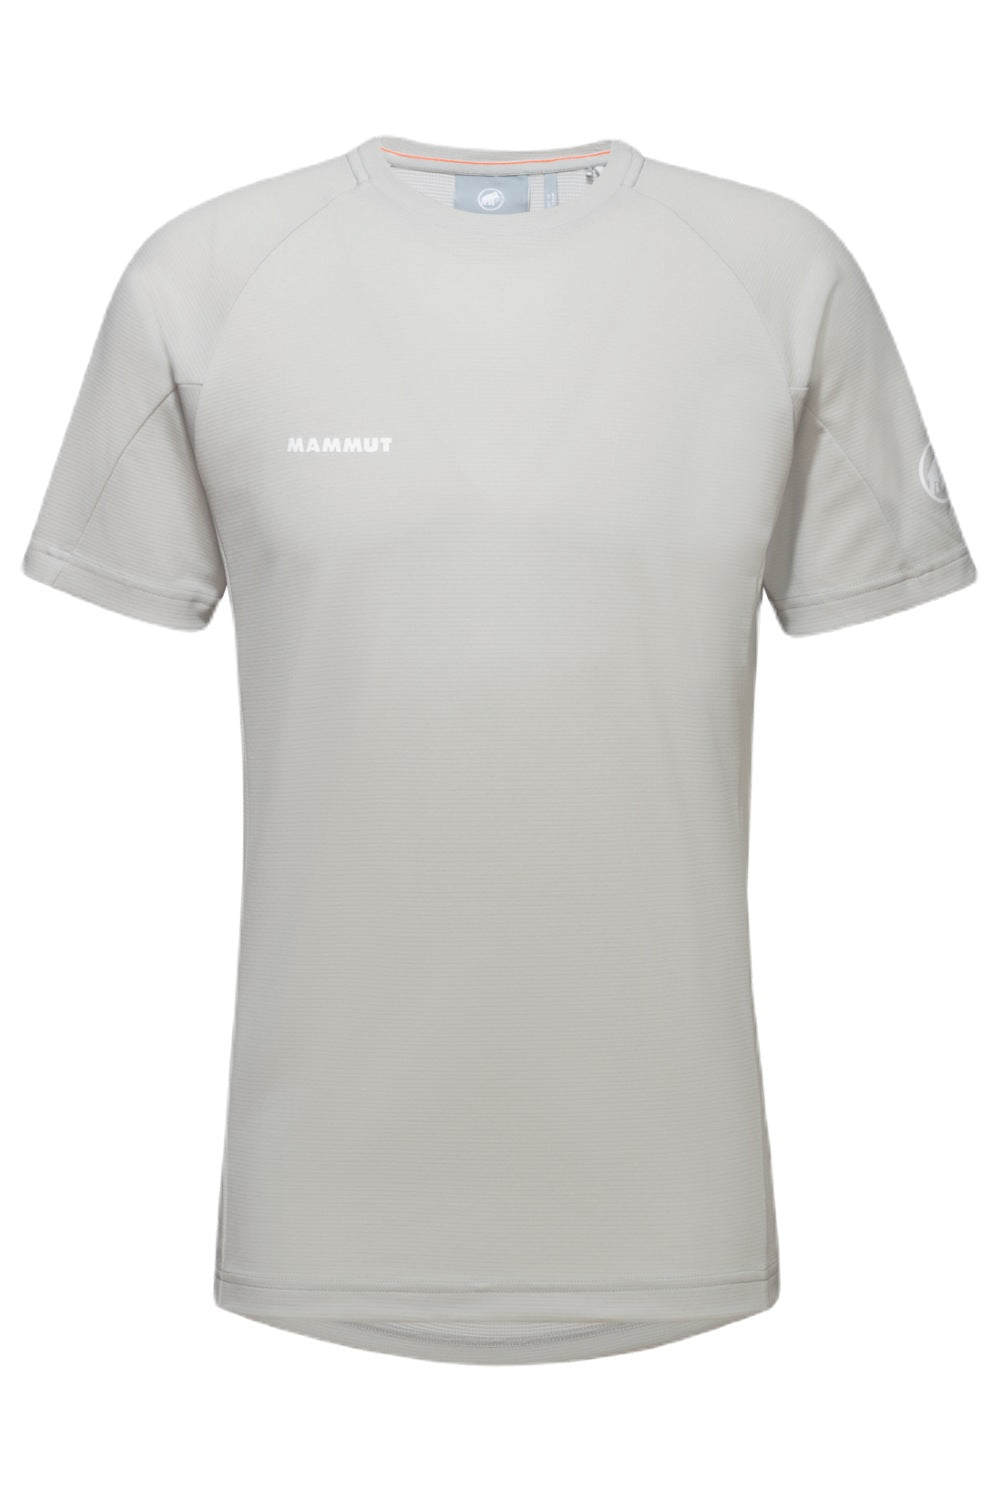 Mammut Aegility FL T-shirt Men